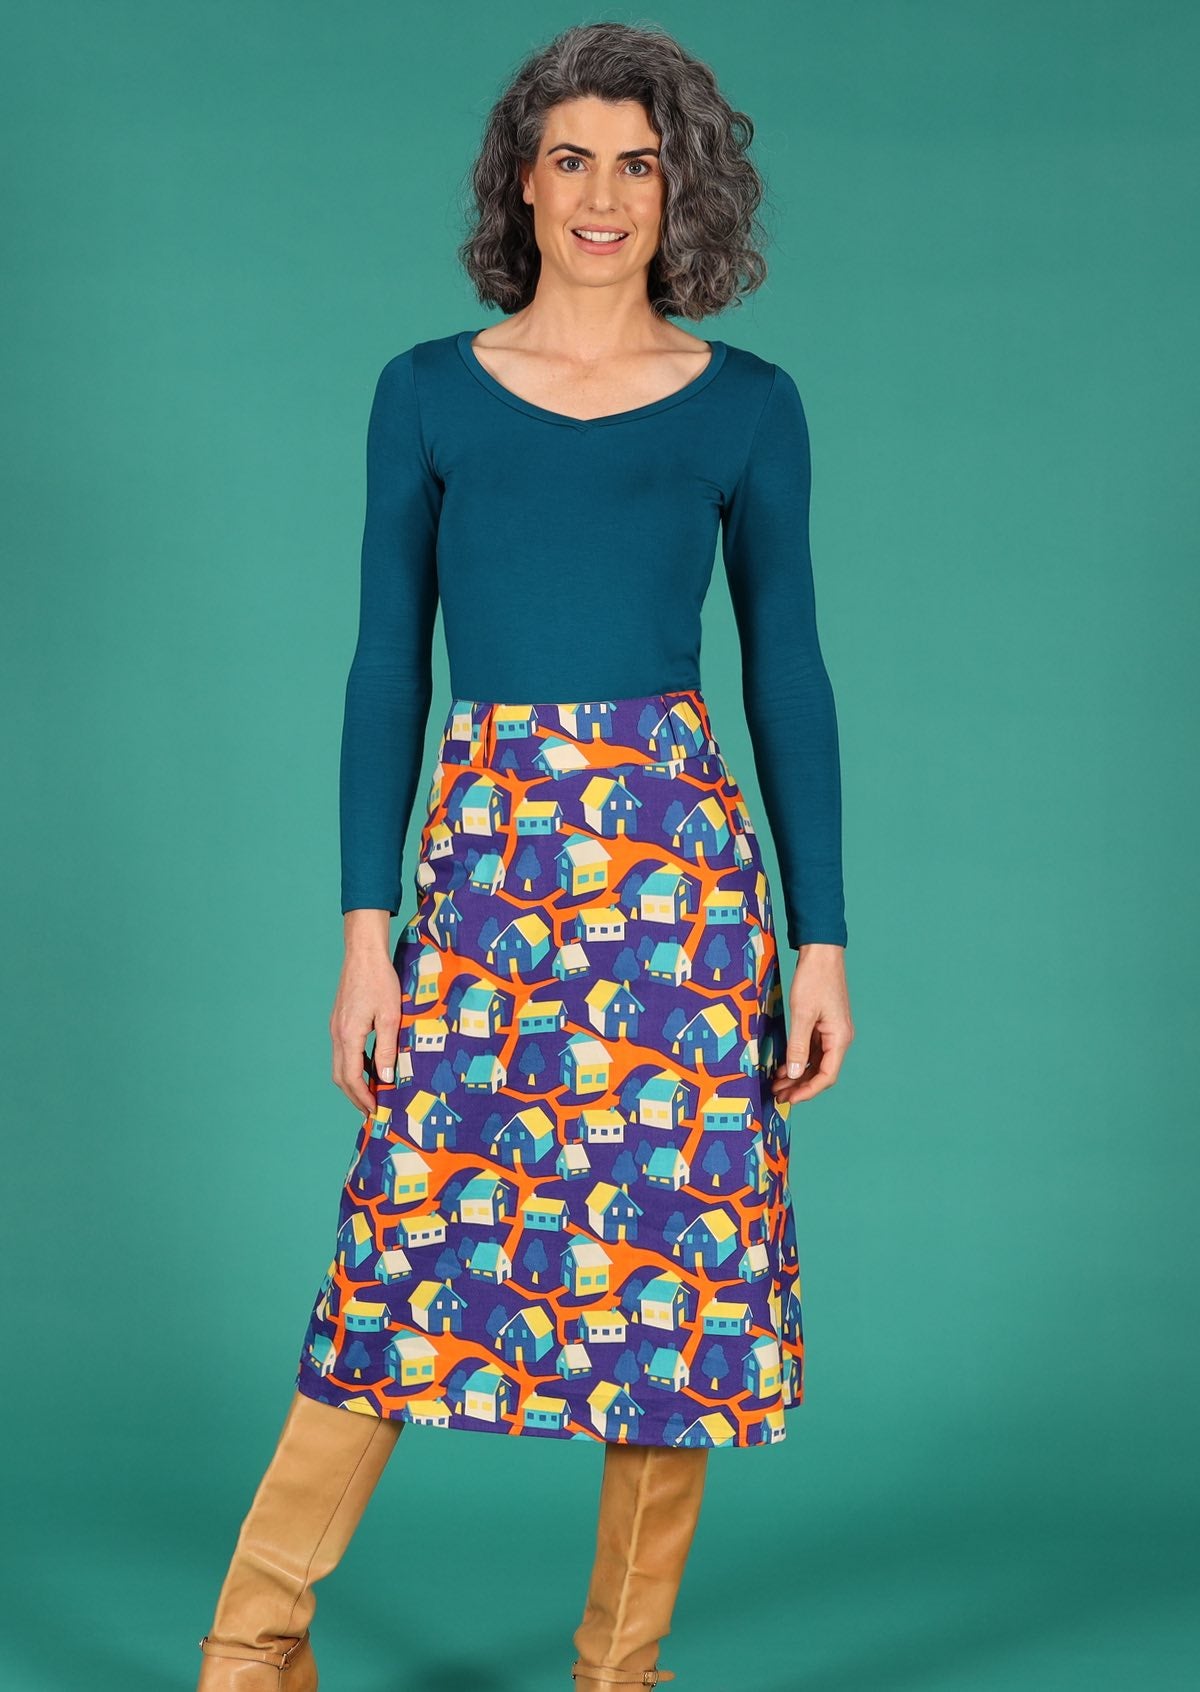 Belt Loop Skirt Around The Houses 100% cotton blue orange yellow retro print mid length skirt with belt loops and side zip | Karma East Australia